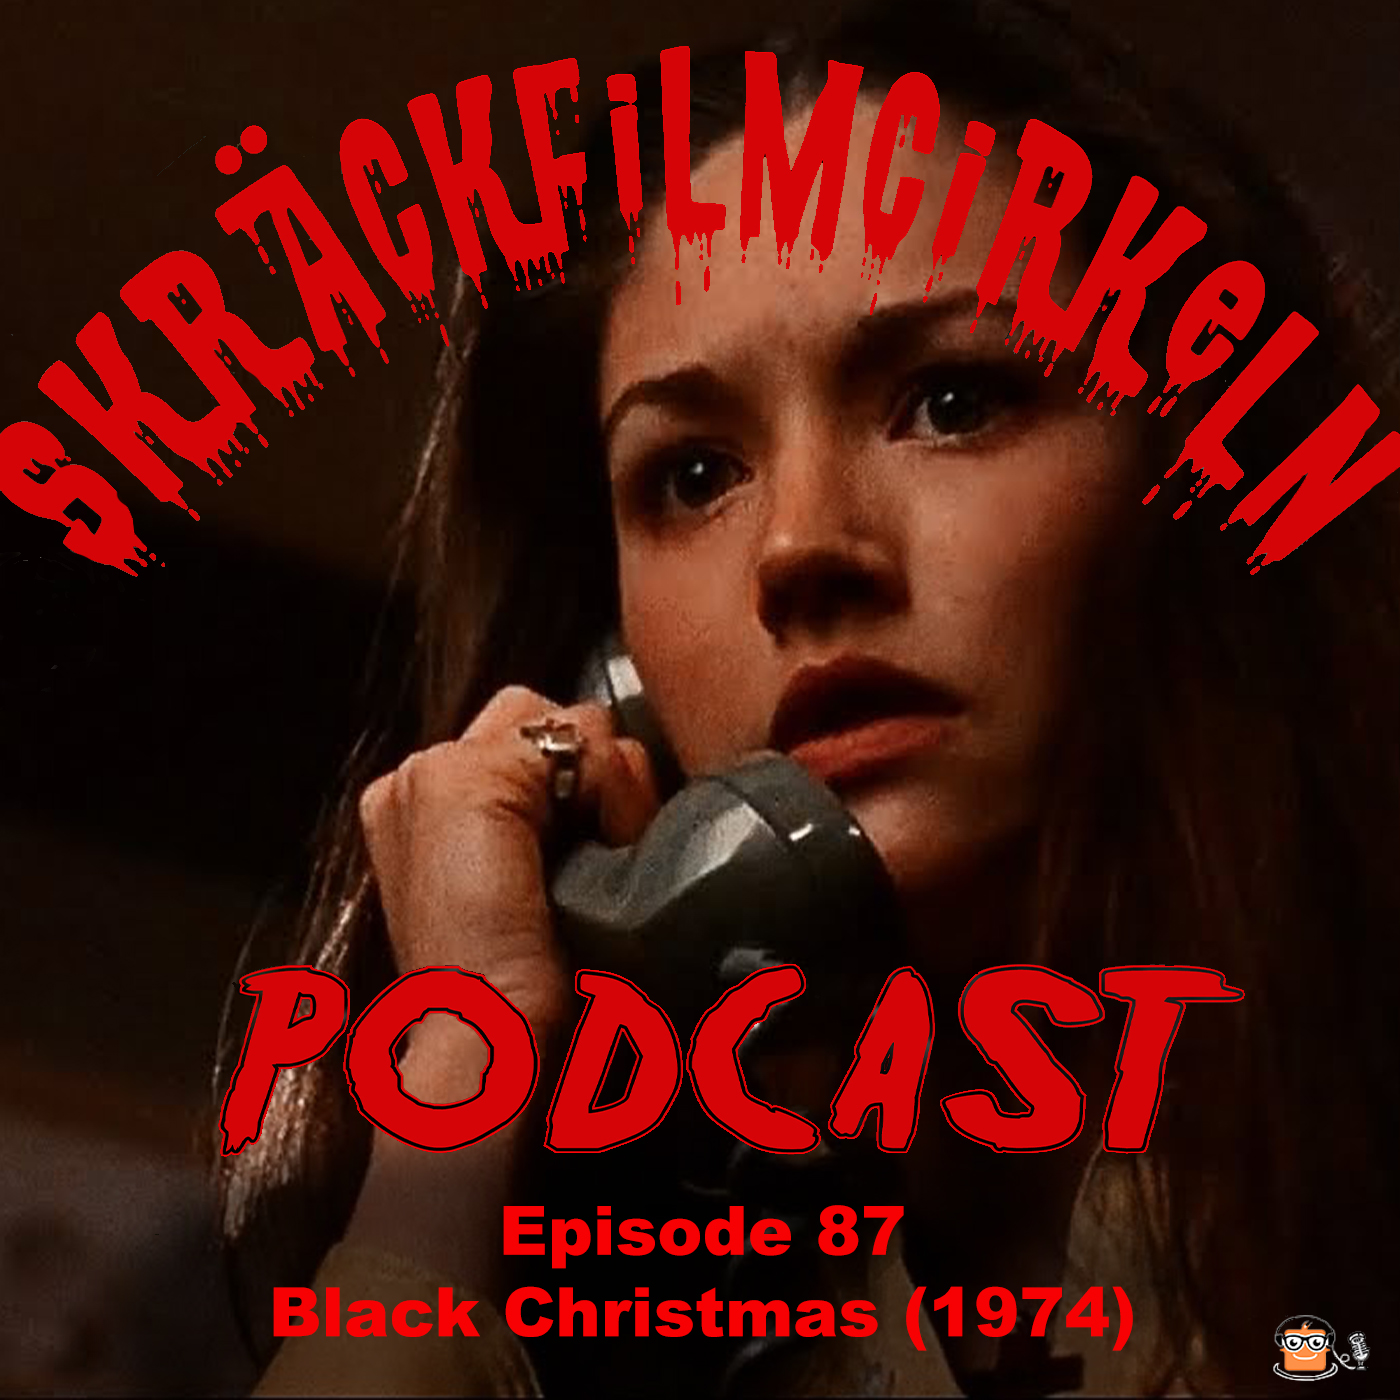 Episode 87 – Protoslasher – Black Christmas (1974)